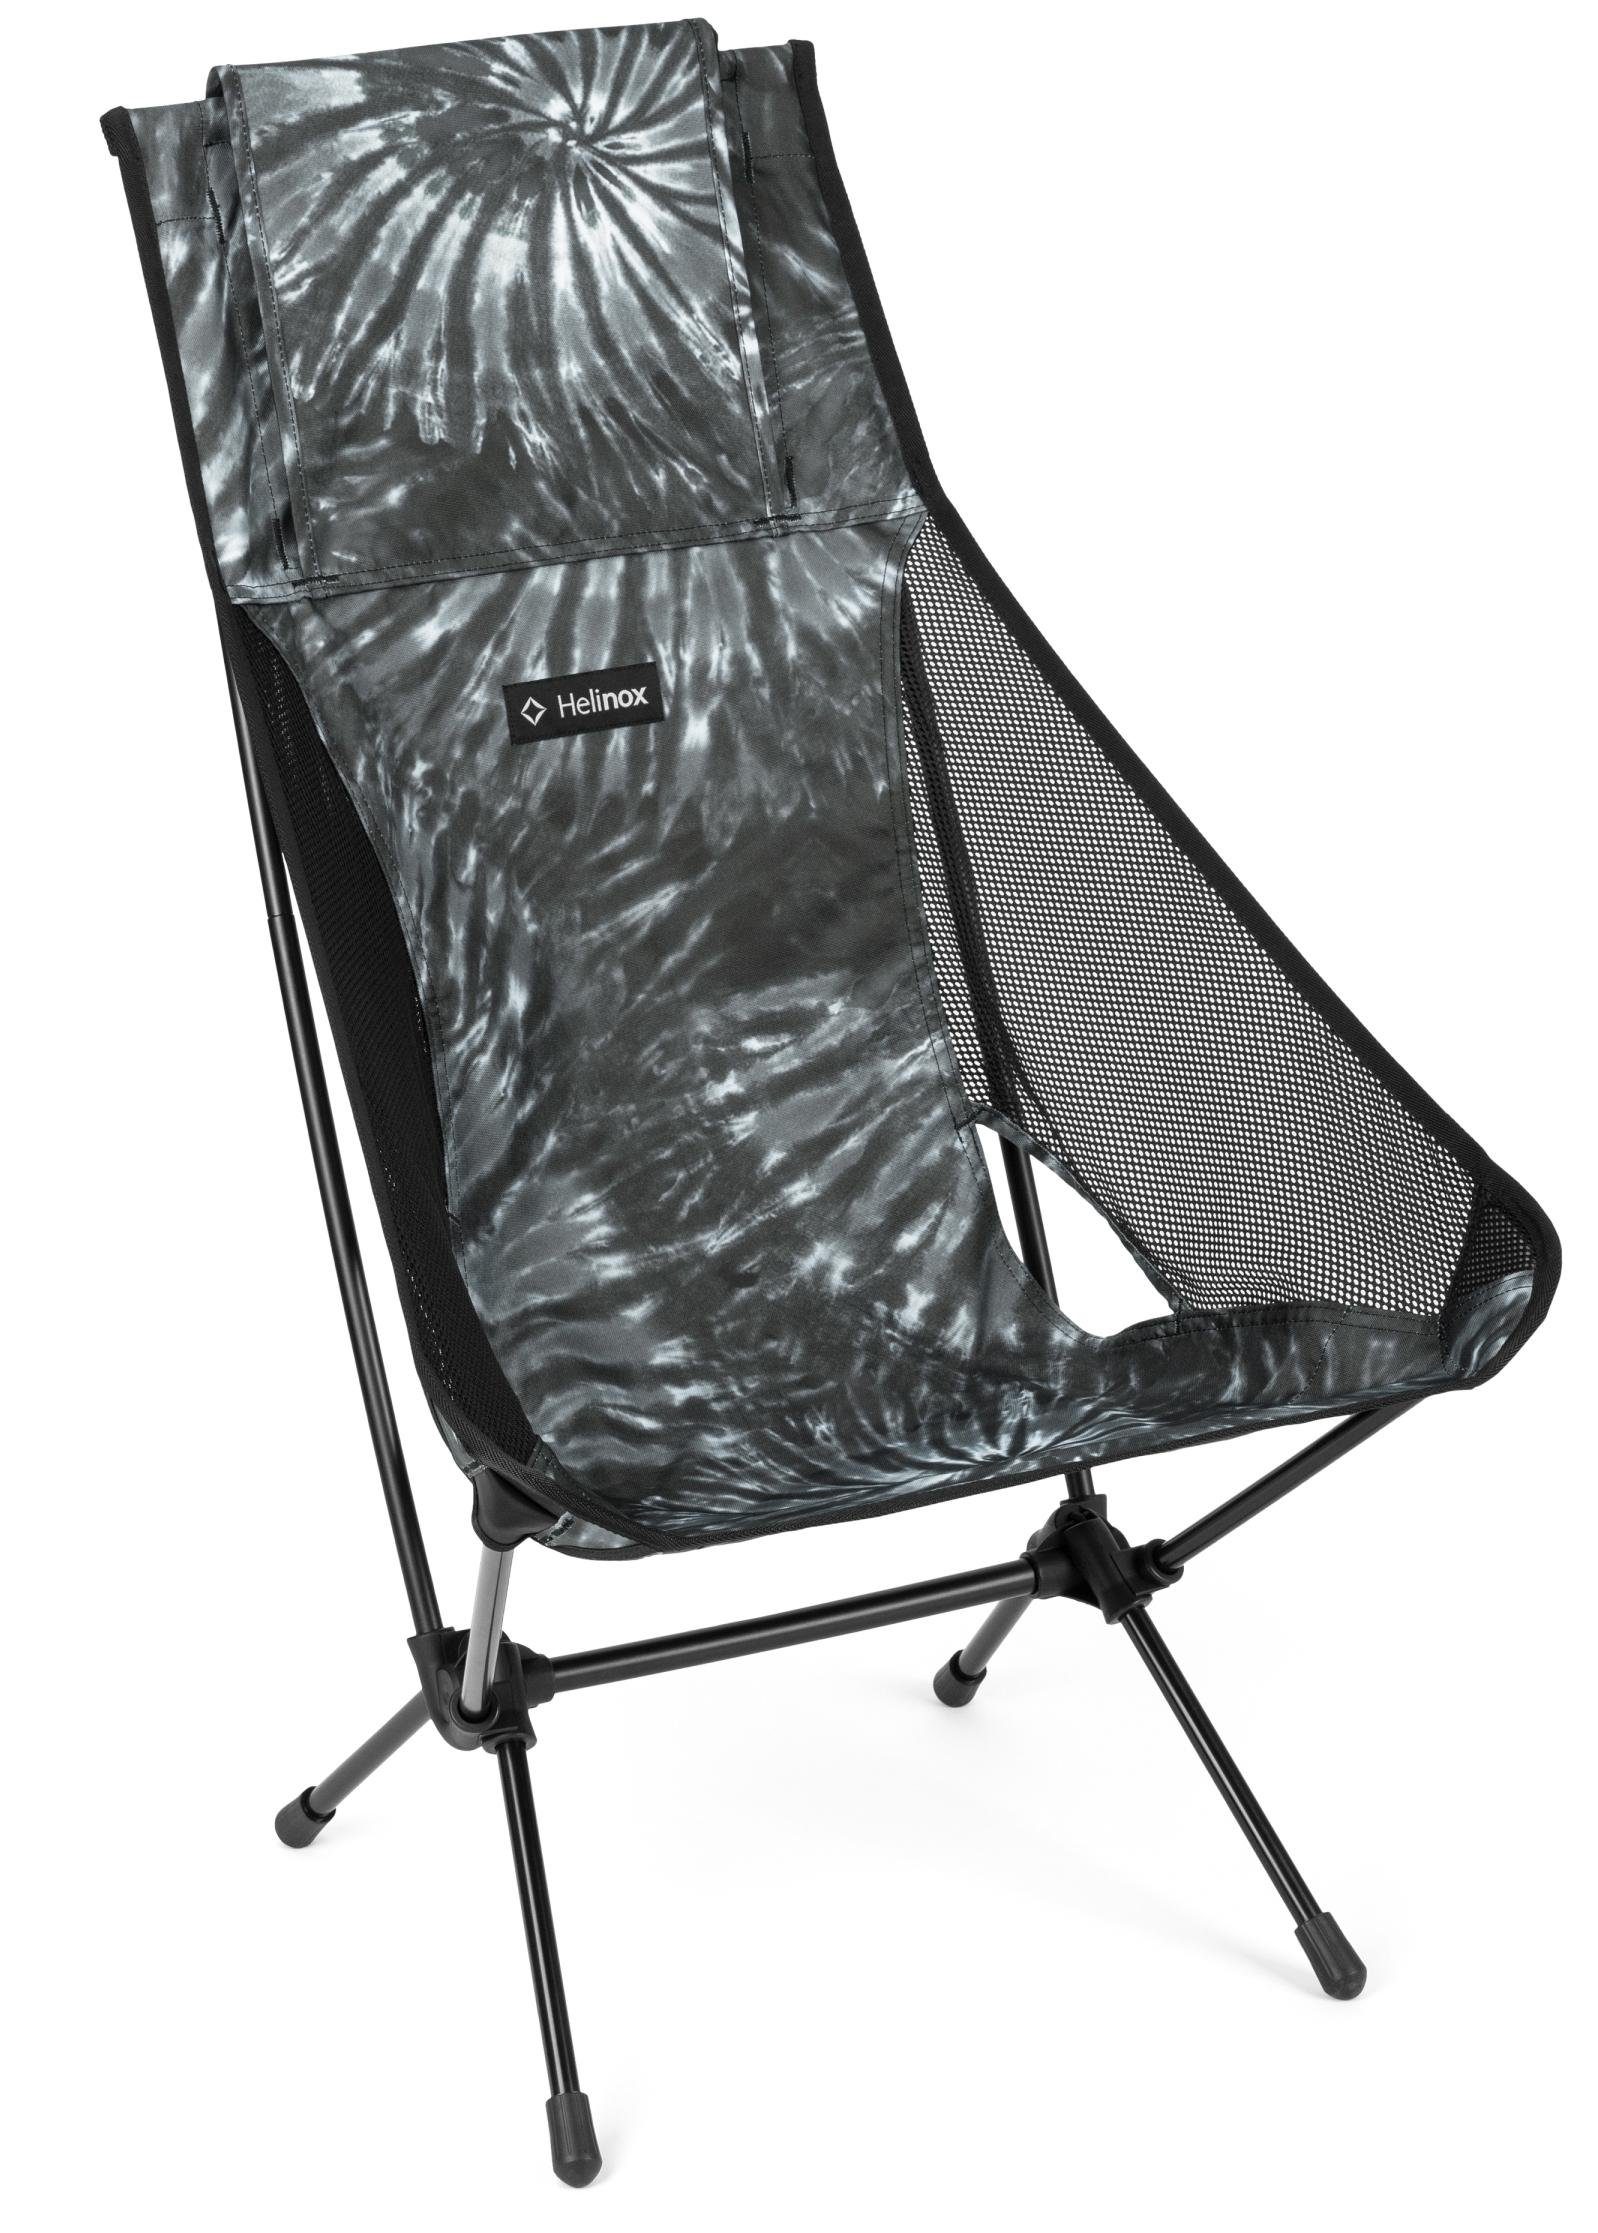 1,18kg Black Dye Campingstuhl bis Helinox Campingstuhl 145 Two Helinox kg) (Gewicht / Chair Tie